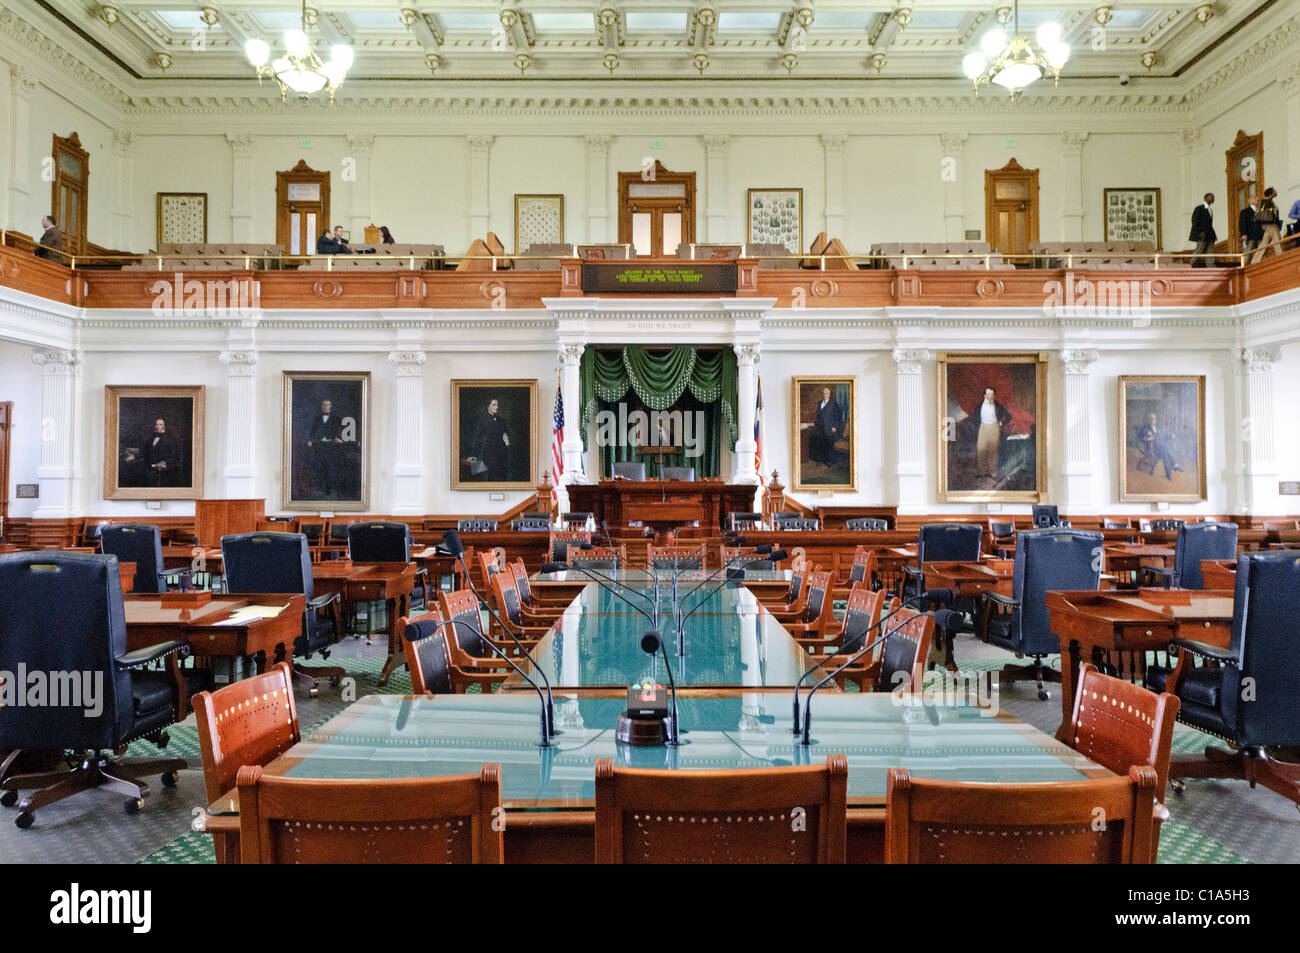 AUSTIN, Texas - Interior of the Senate chamber of the Legislature of the State of Texas inside the Texas State Captiol in Austin, Texas. The Senate consists of 31 members. Stock Photo